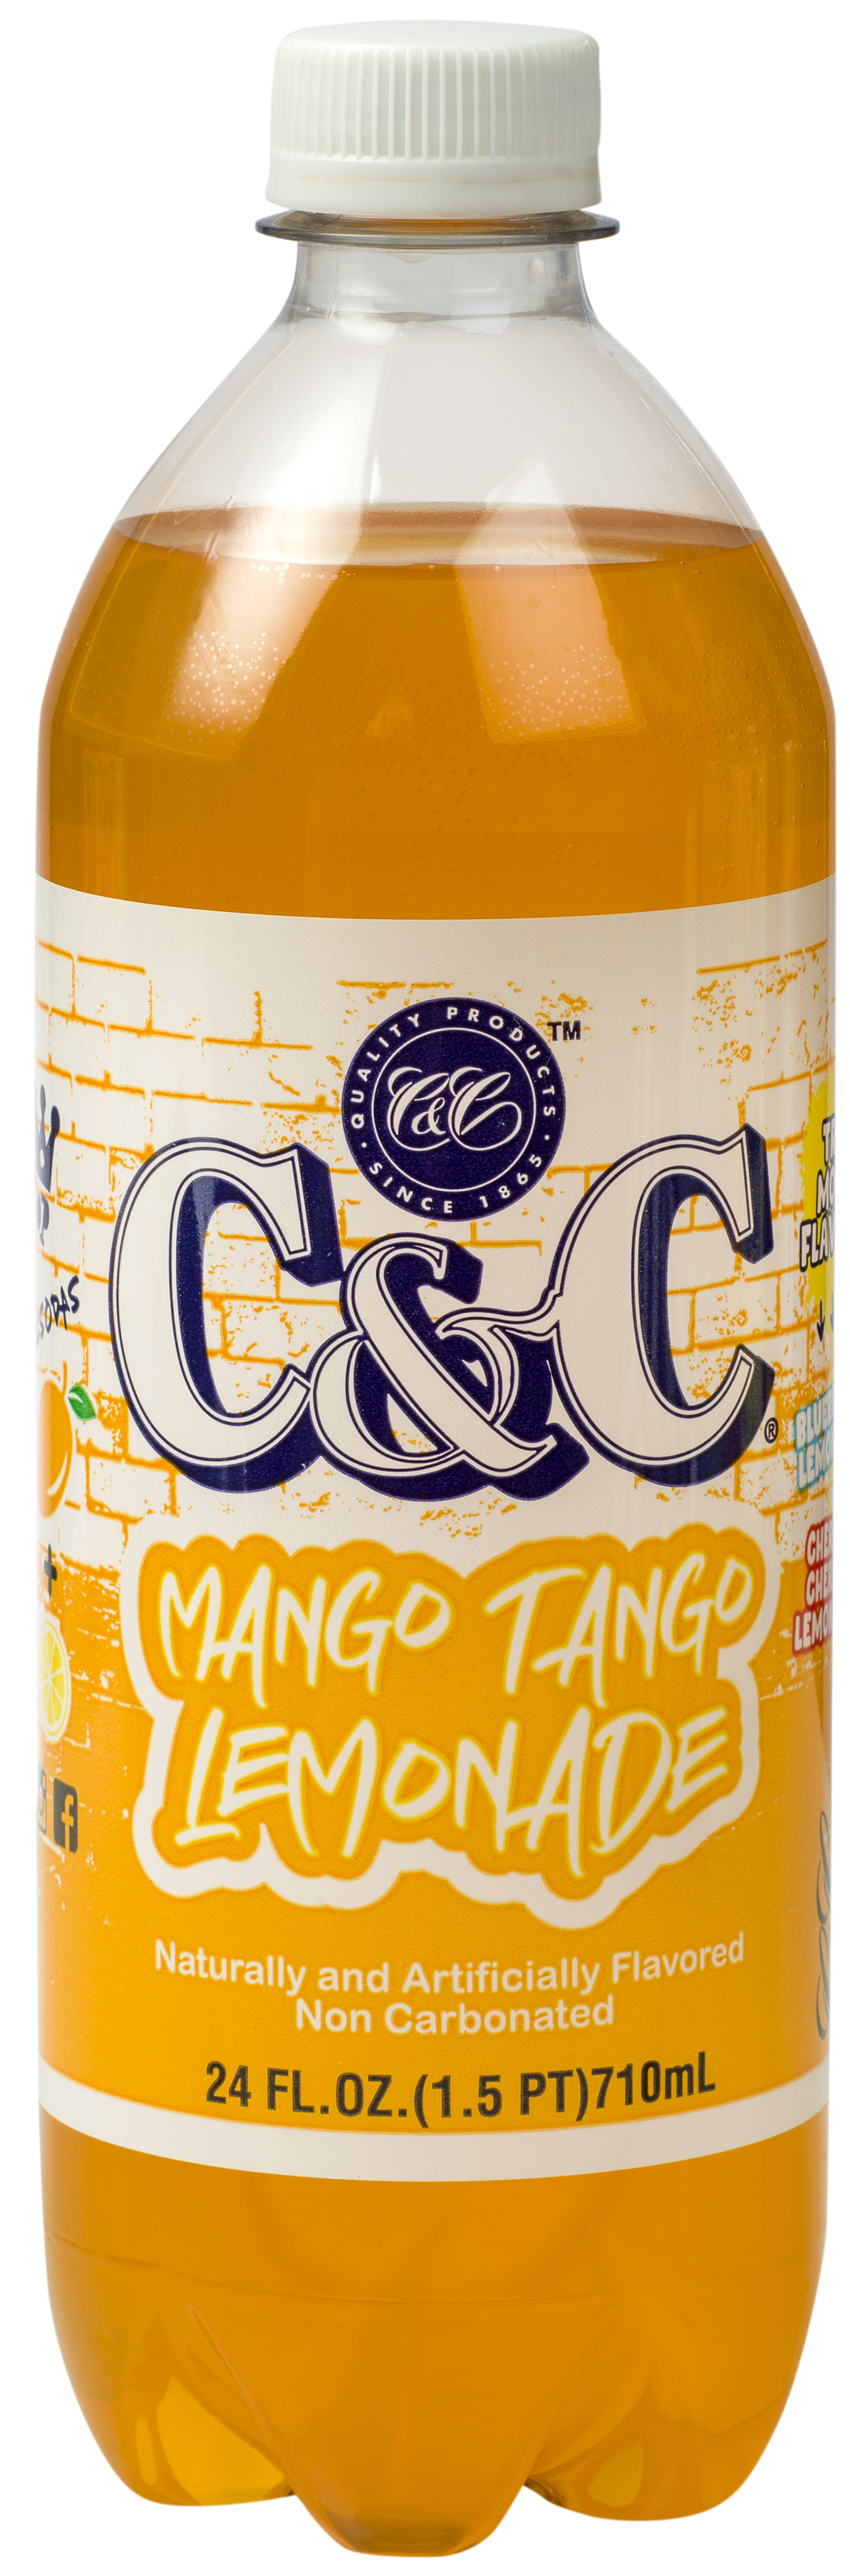 NEW! C&C Mango Tango Lemonade (Non Carbonated) - Case of 24 Bottles